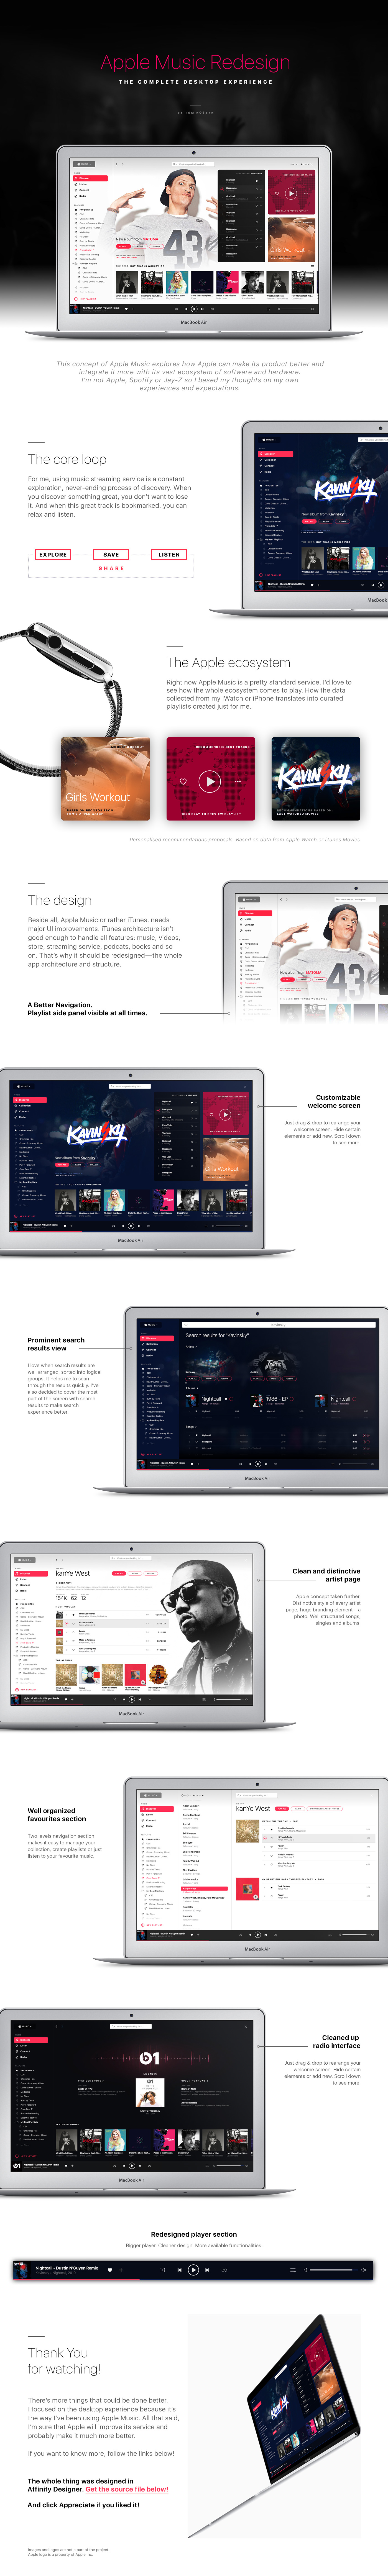 apple Apple Music spotify tidal app desktop mac beats Kavinsky watch redesign concept Radio Streaming itunes